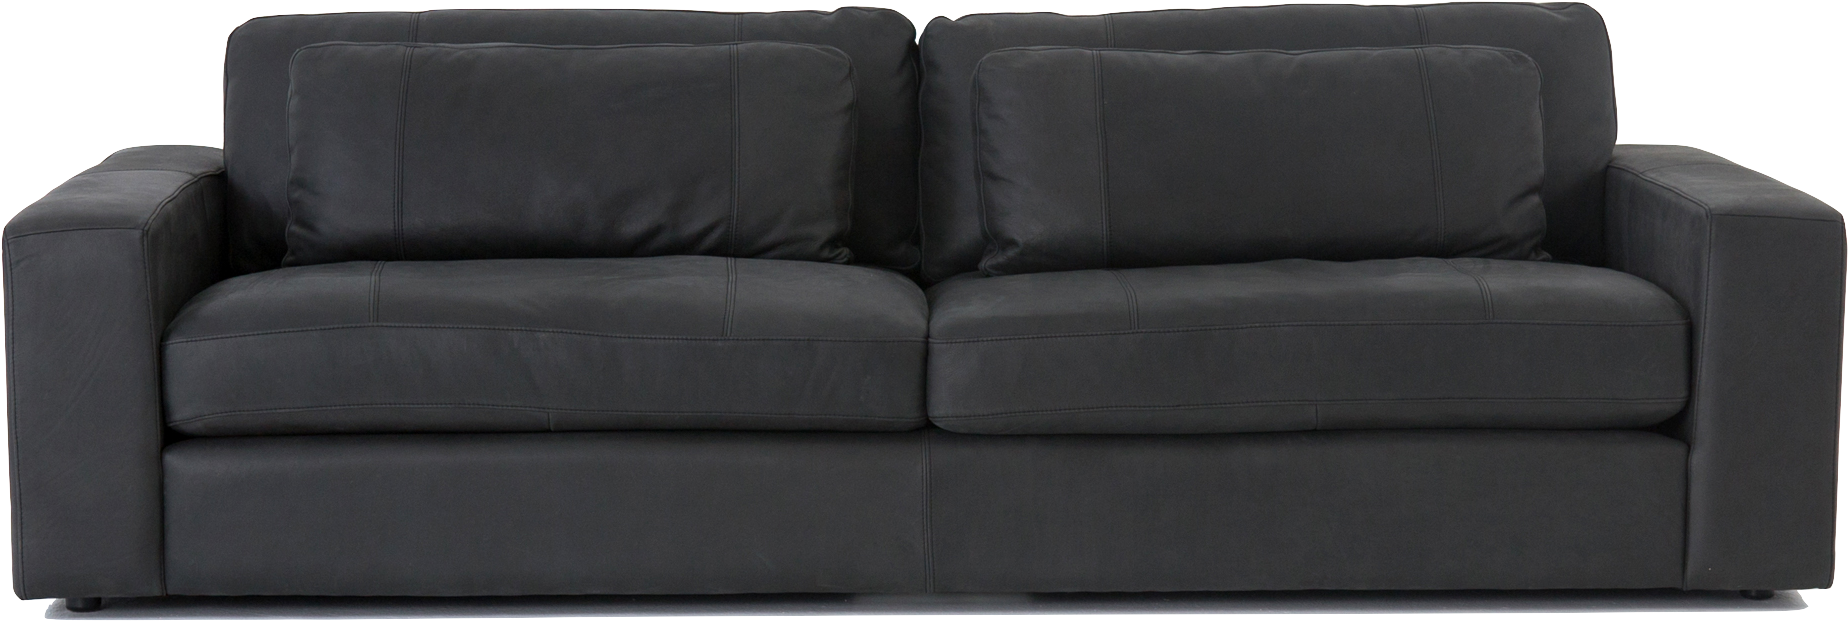 Modern Black Leather Sofa PNG image